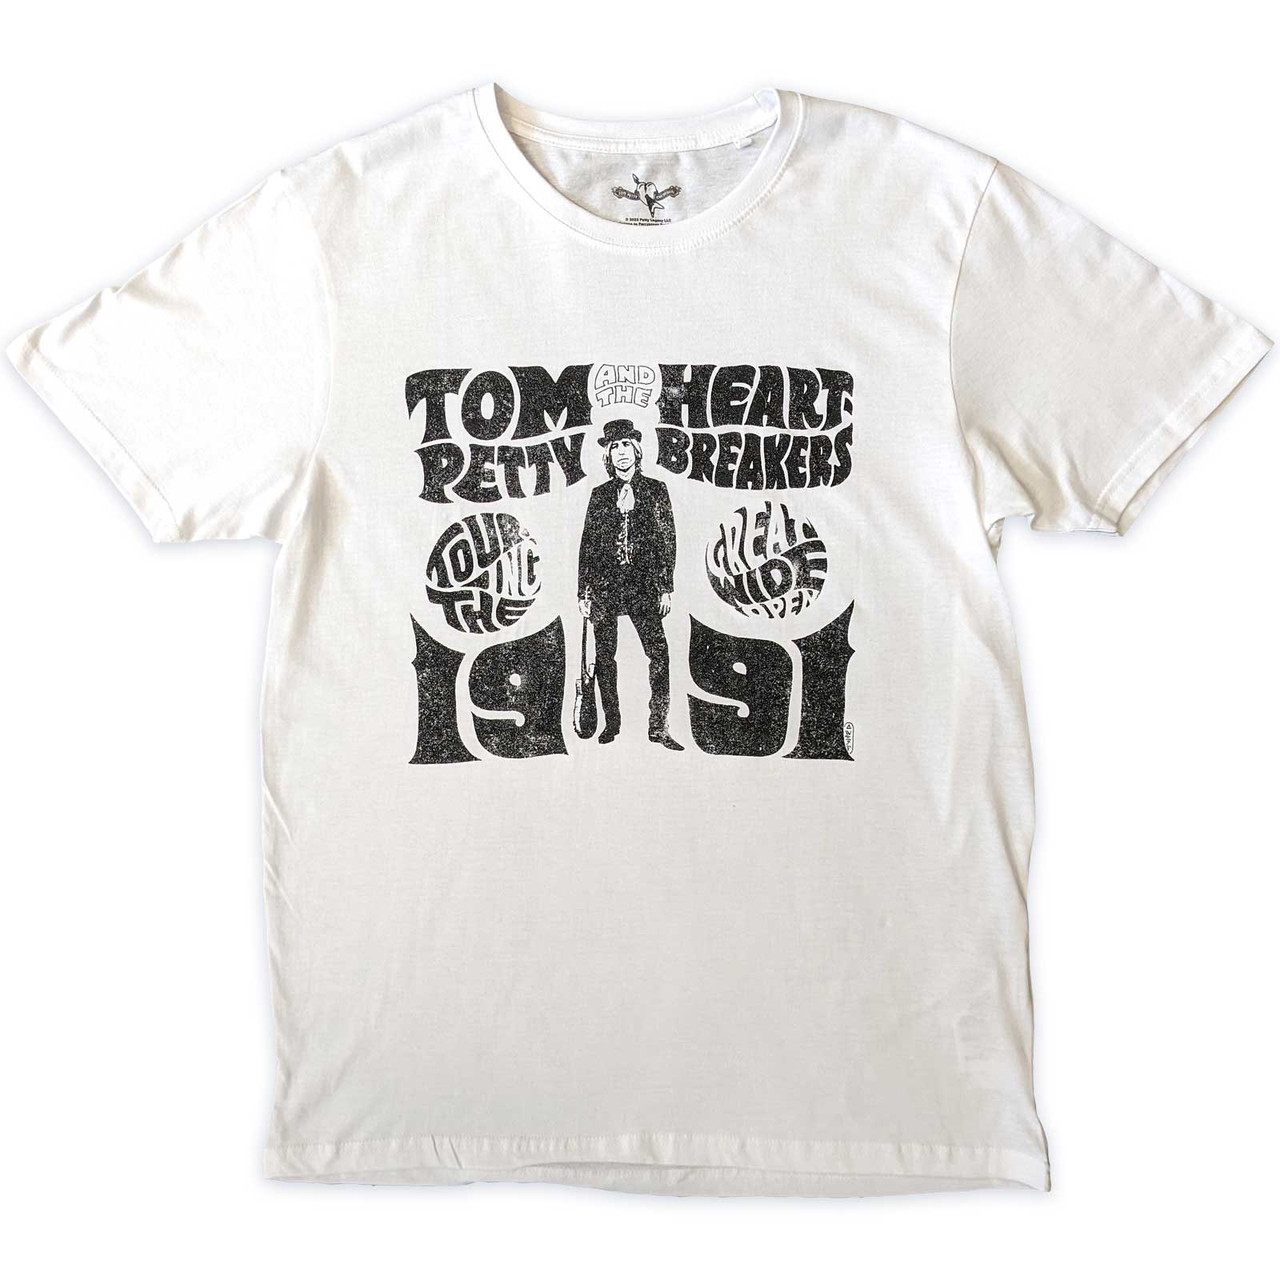 Tom Petty u0026 The Heartbreakers Great Wide Open Tour T-Shirt